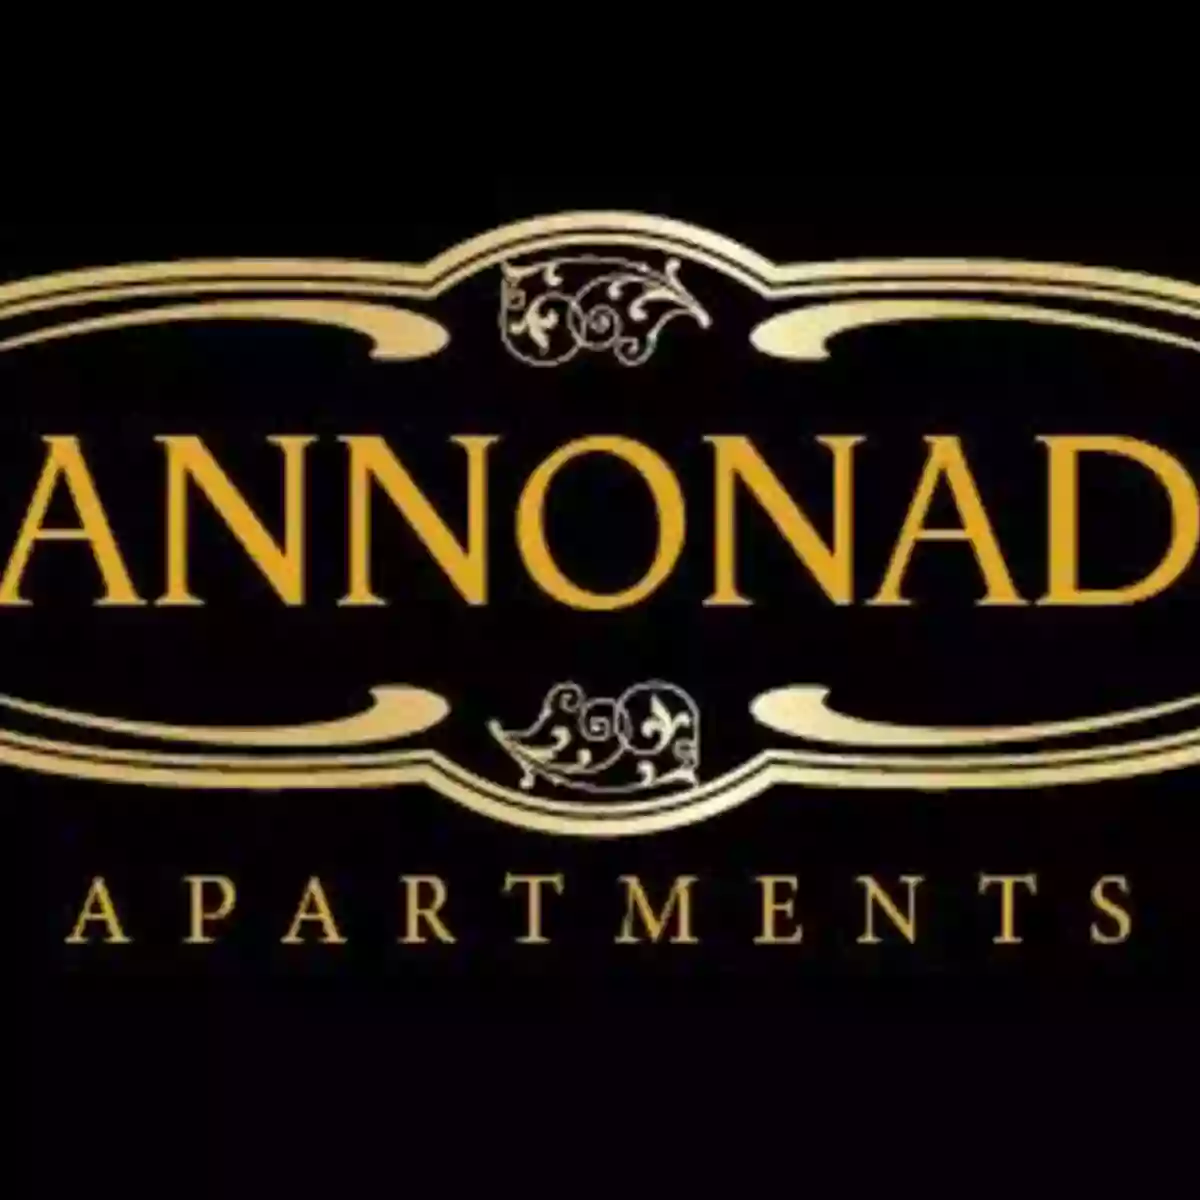 Cannonade Apartments